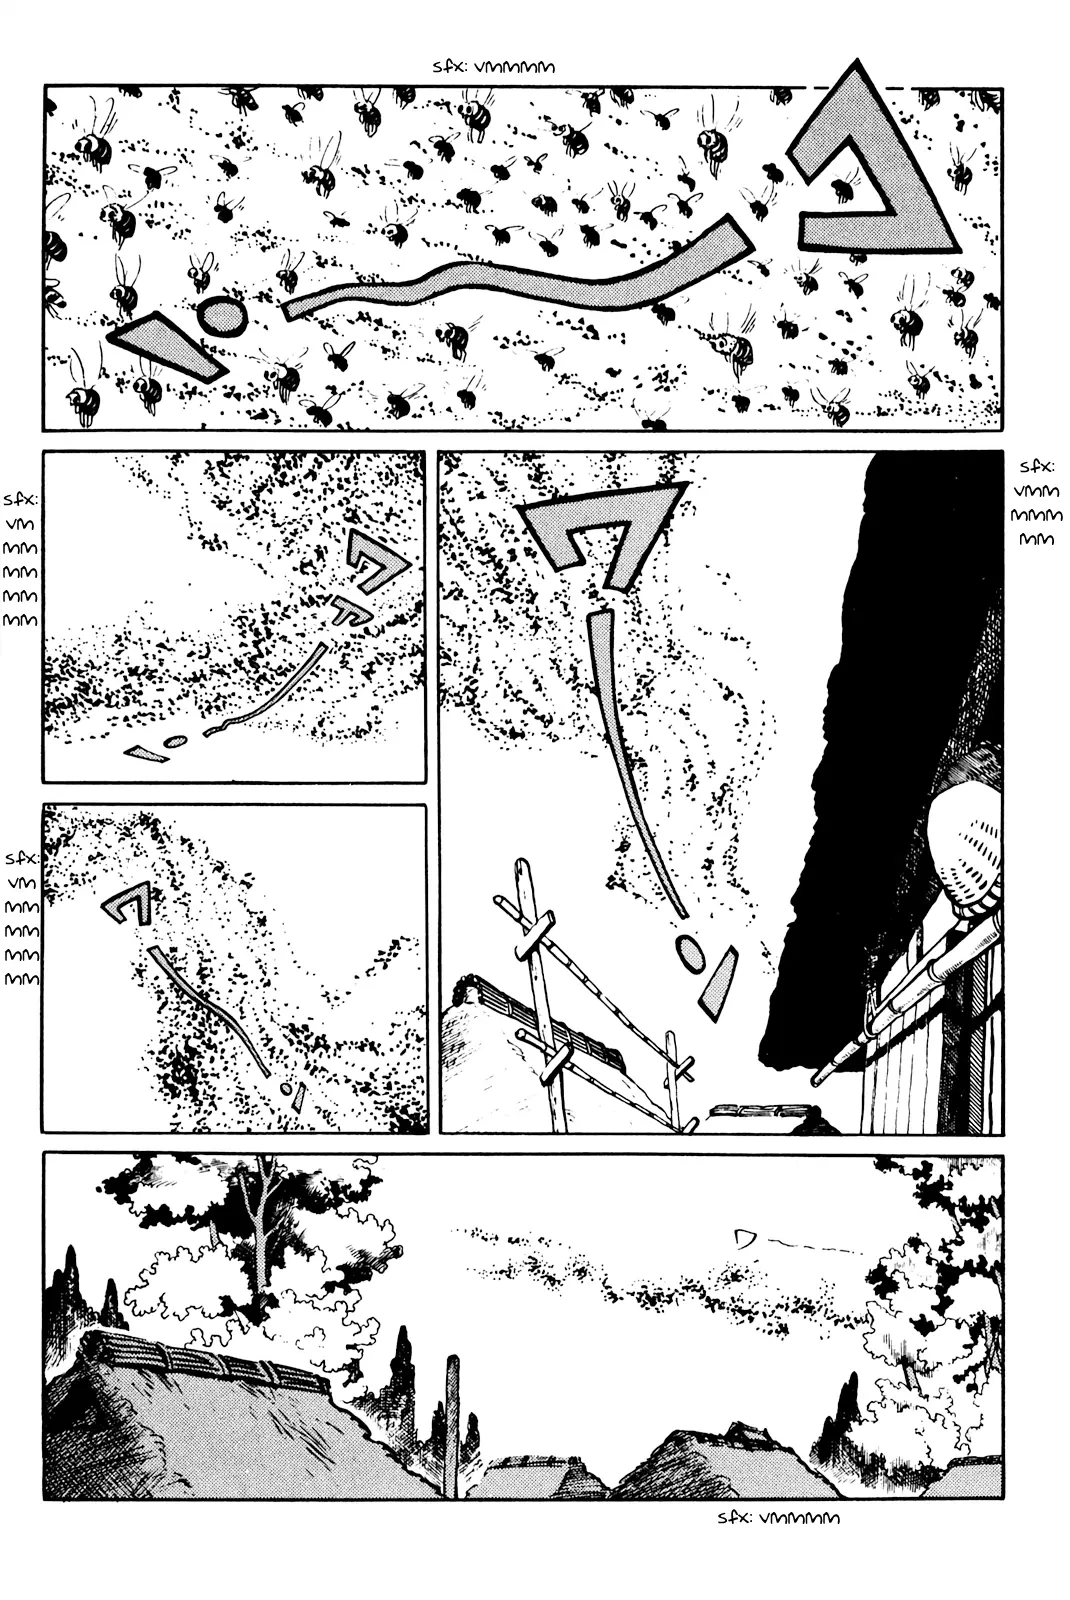 Tetsuya Chiba Short Stories - Shojo Manga - 20 page 13-375983f6